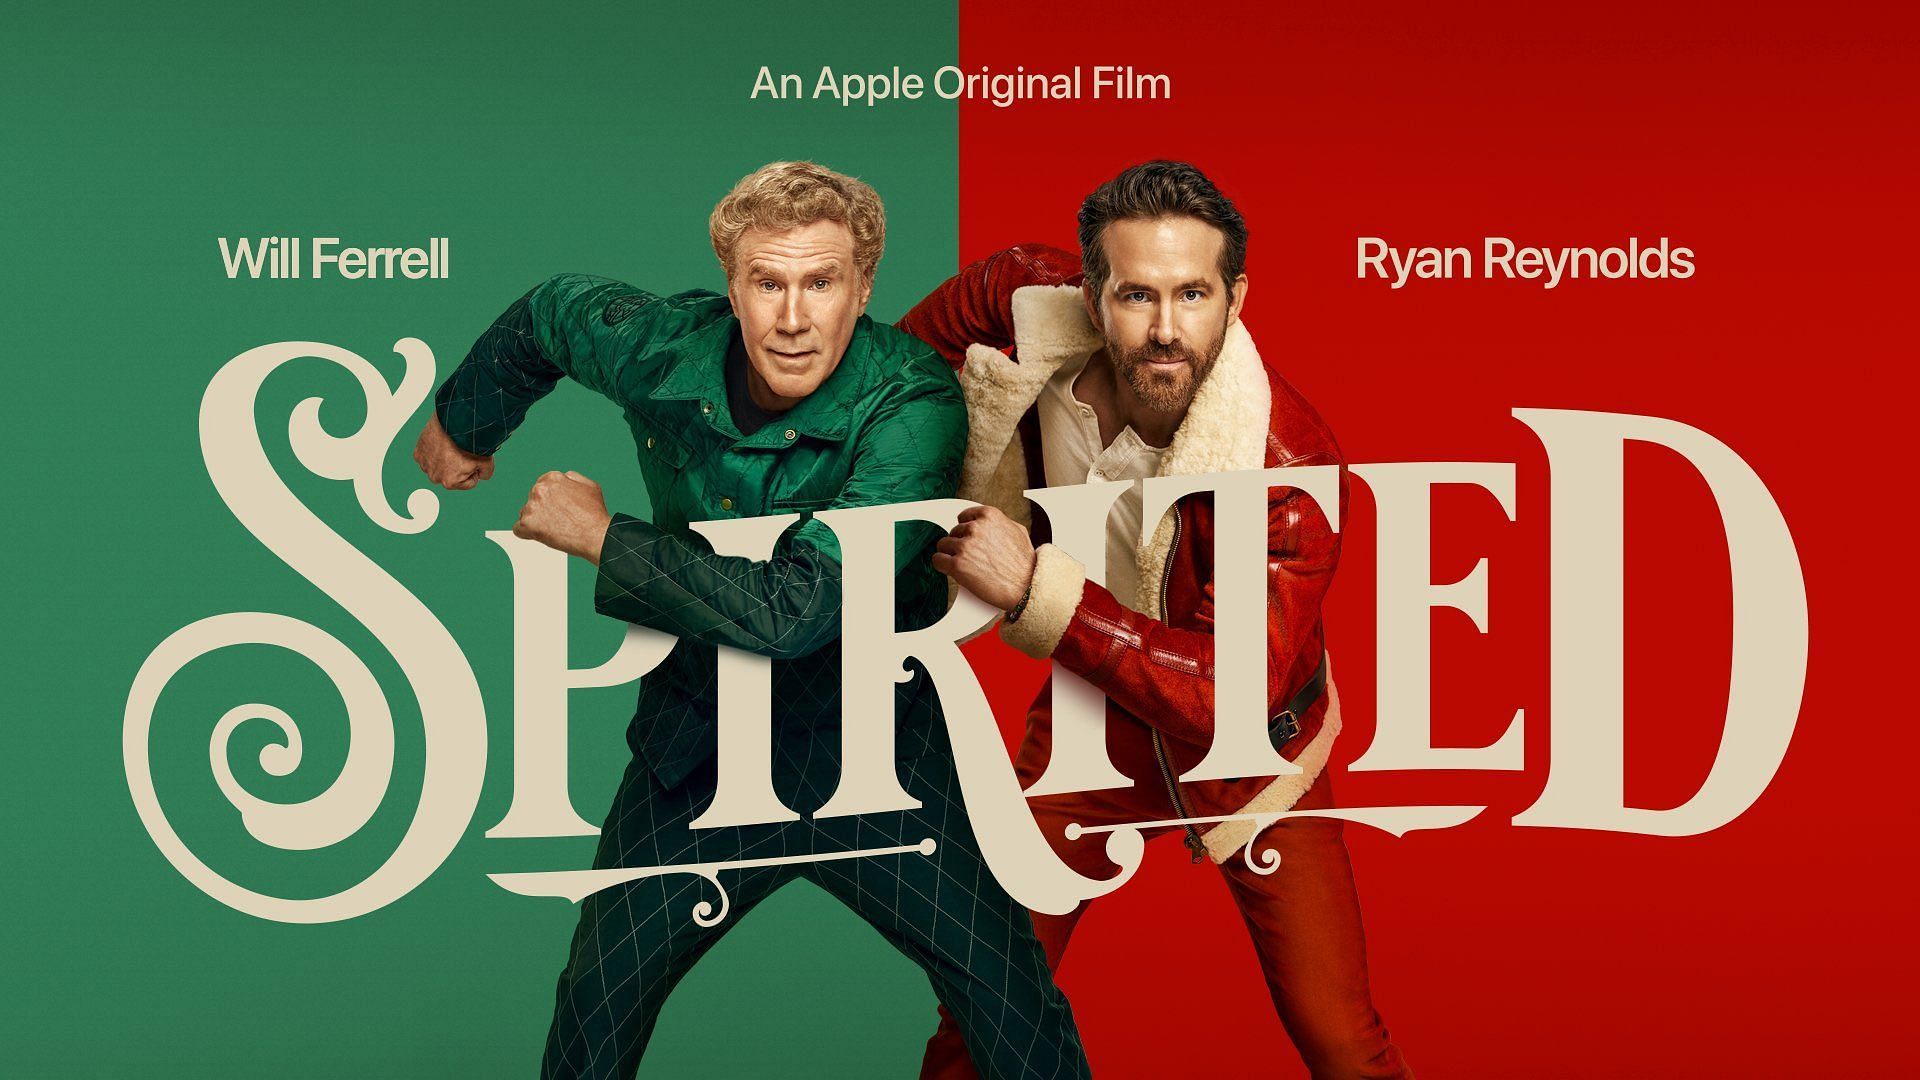 Will Ferrell and Ryan Reynolds star in Spirited. (Photo via Apple TV+)